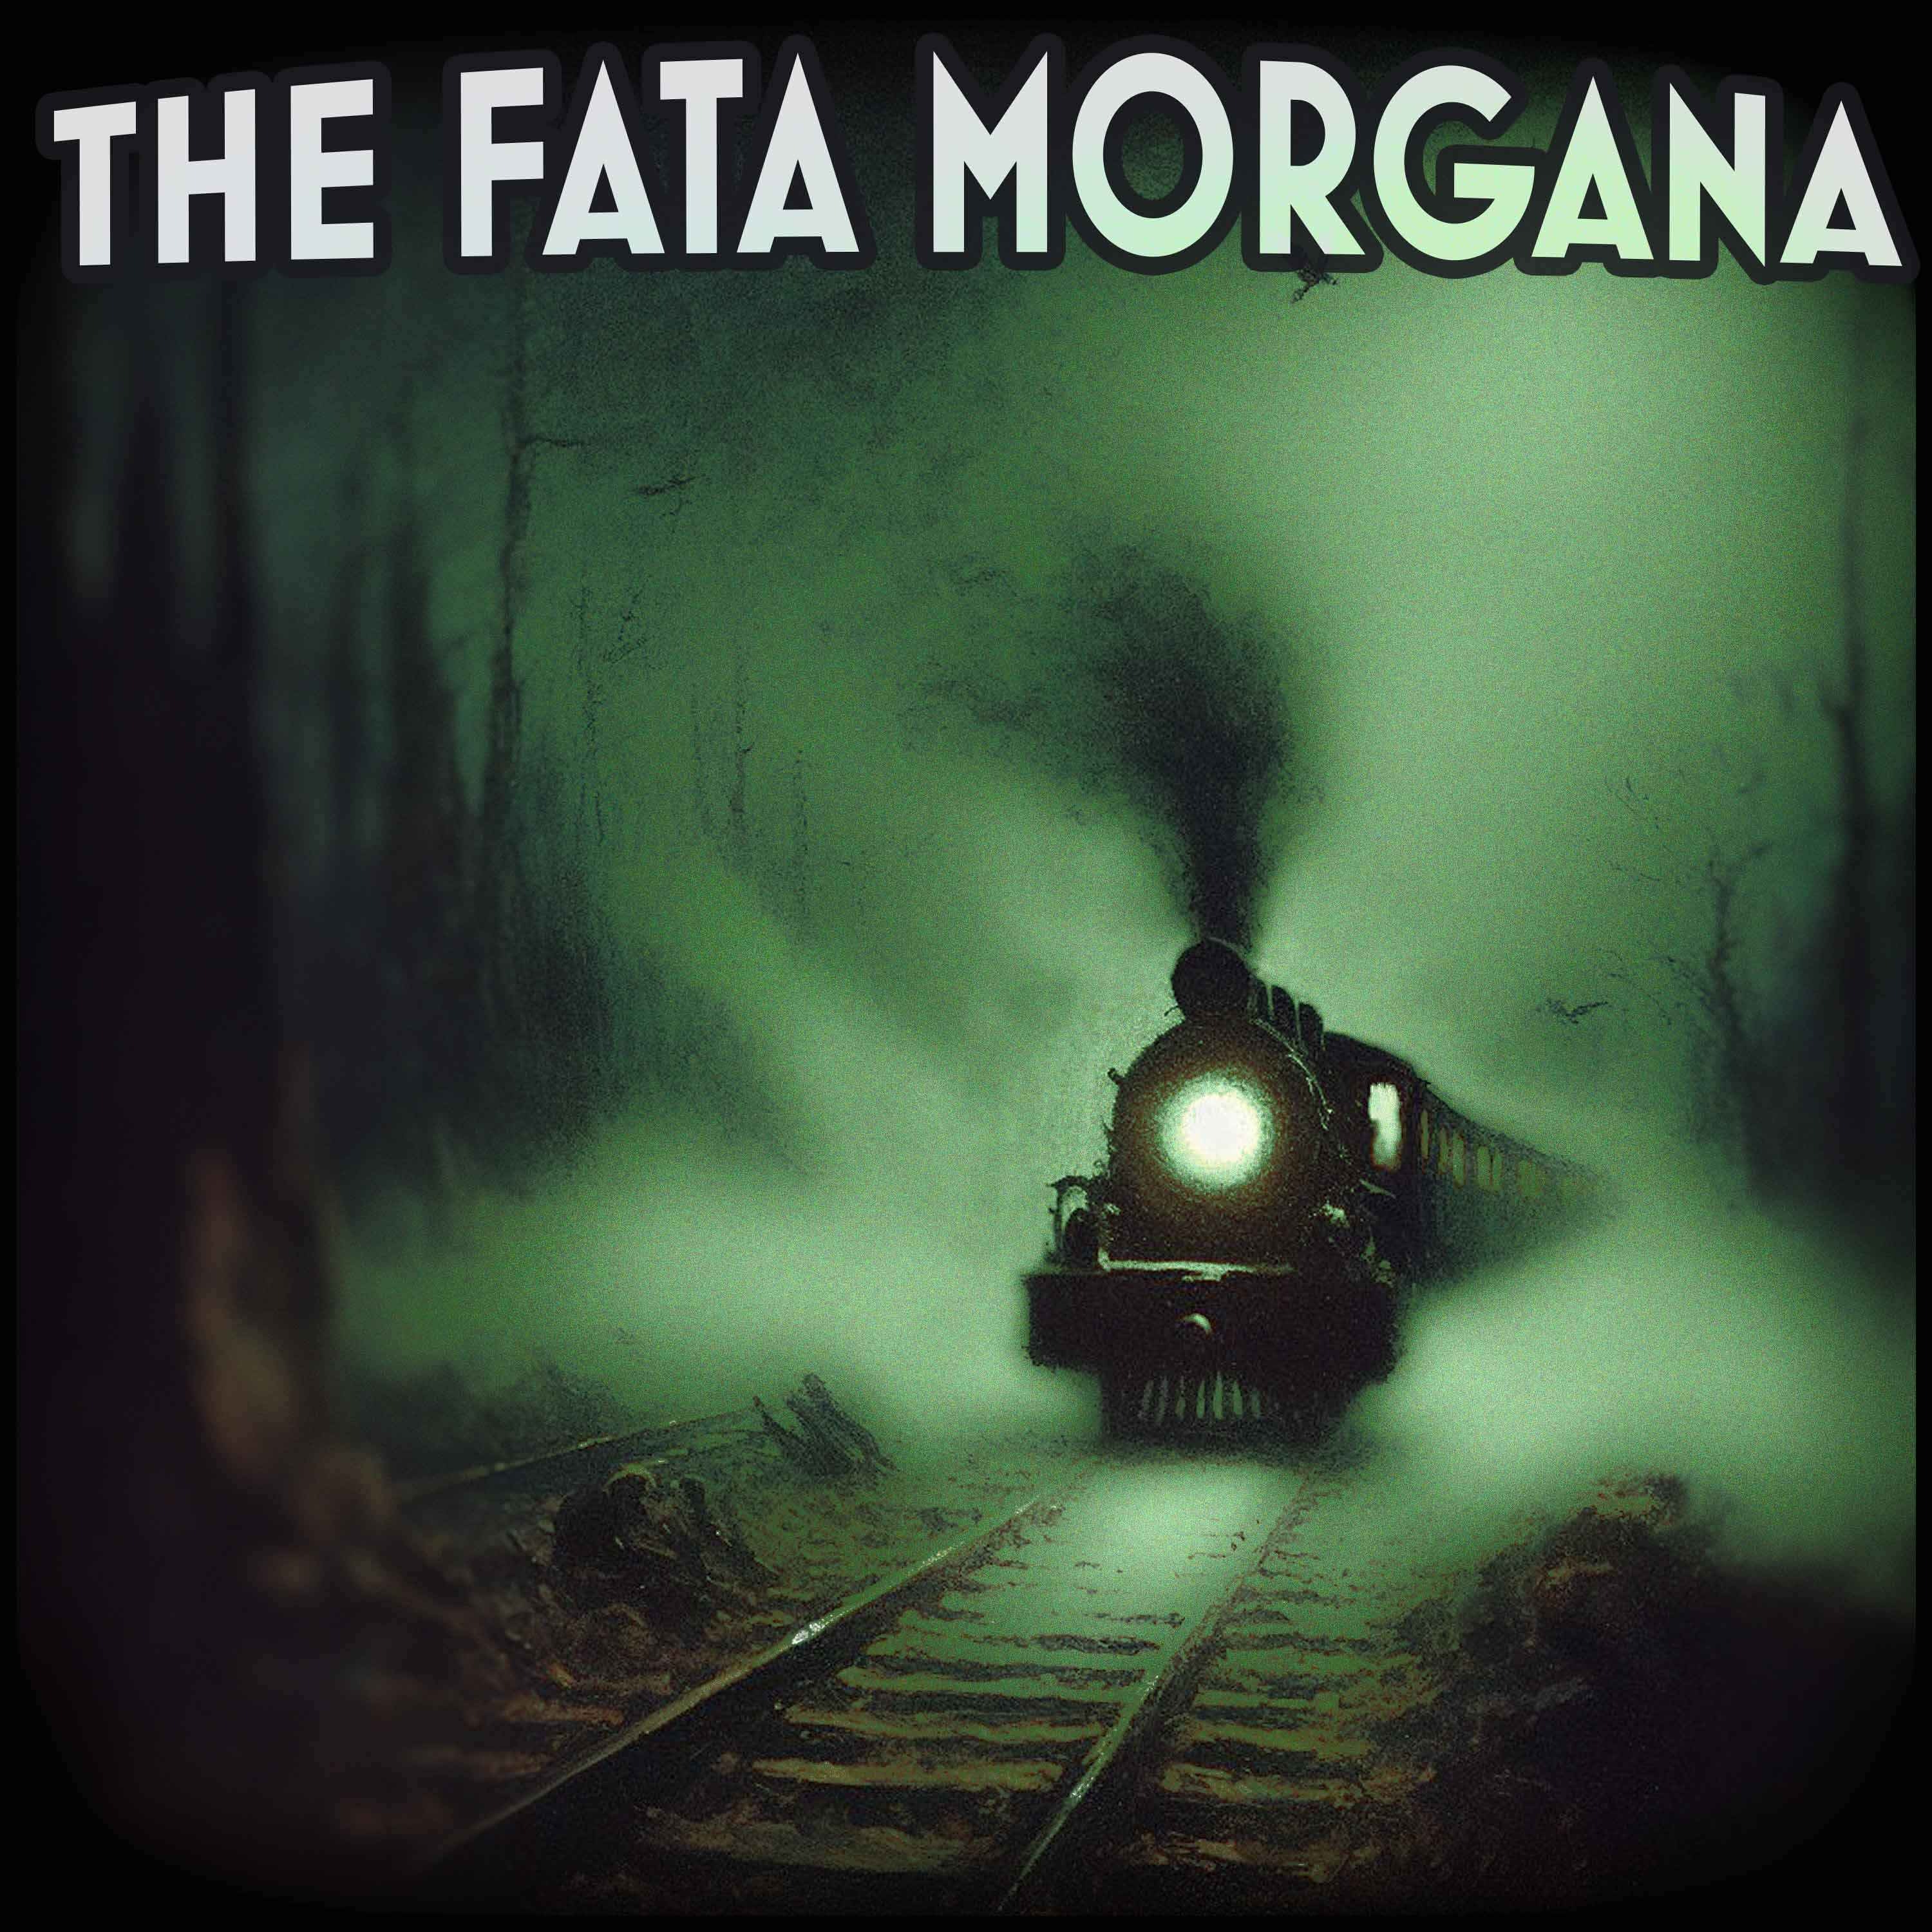 The Fata Morgana - Episode Three